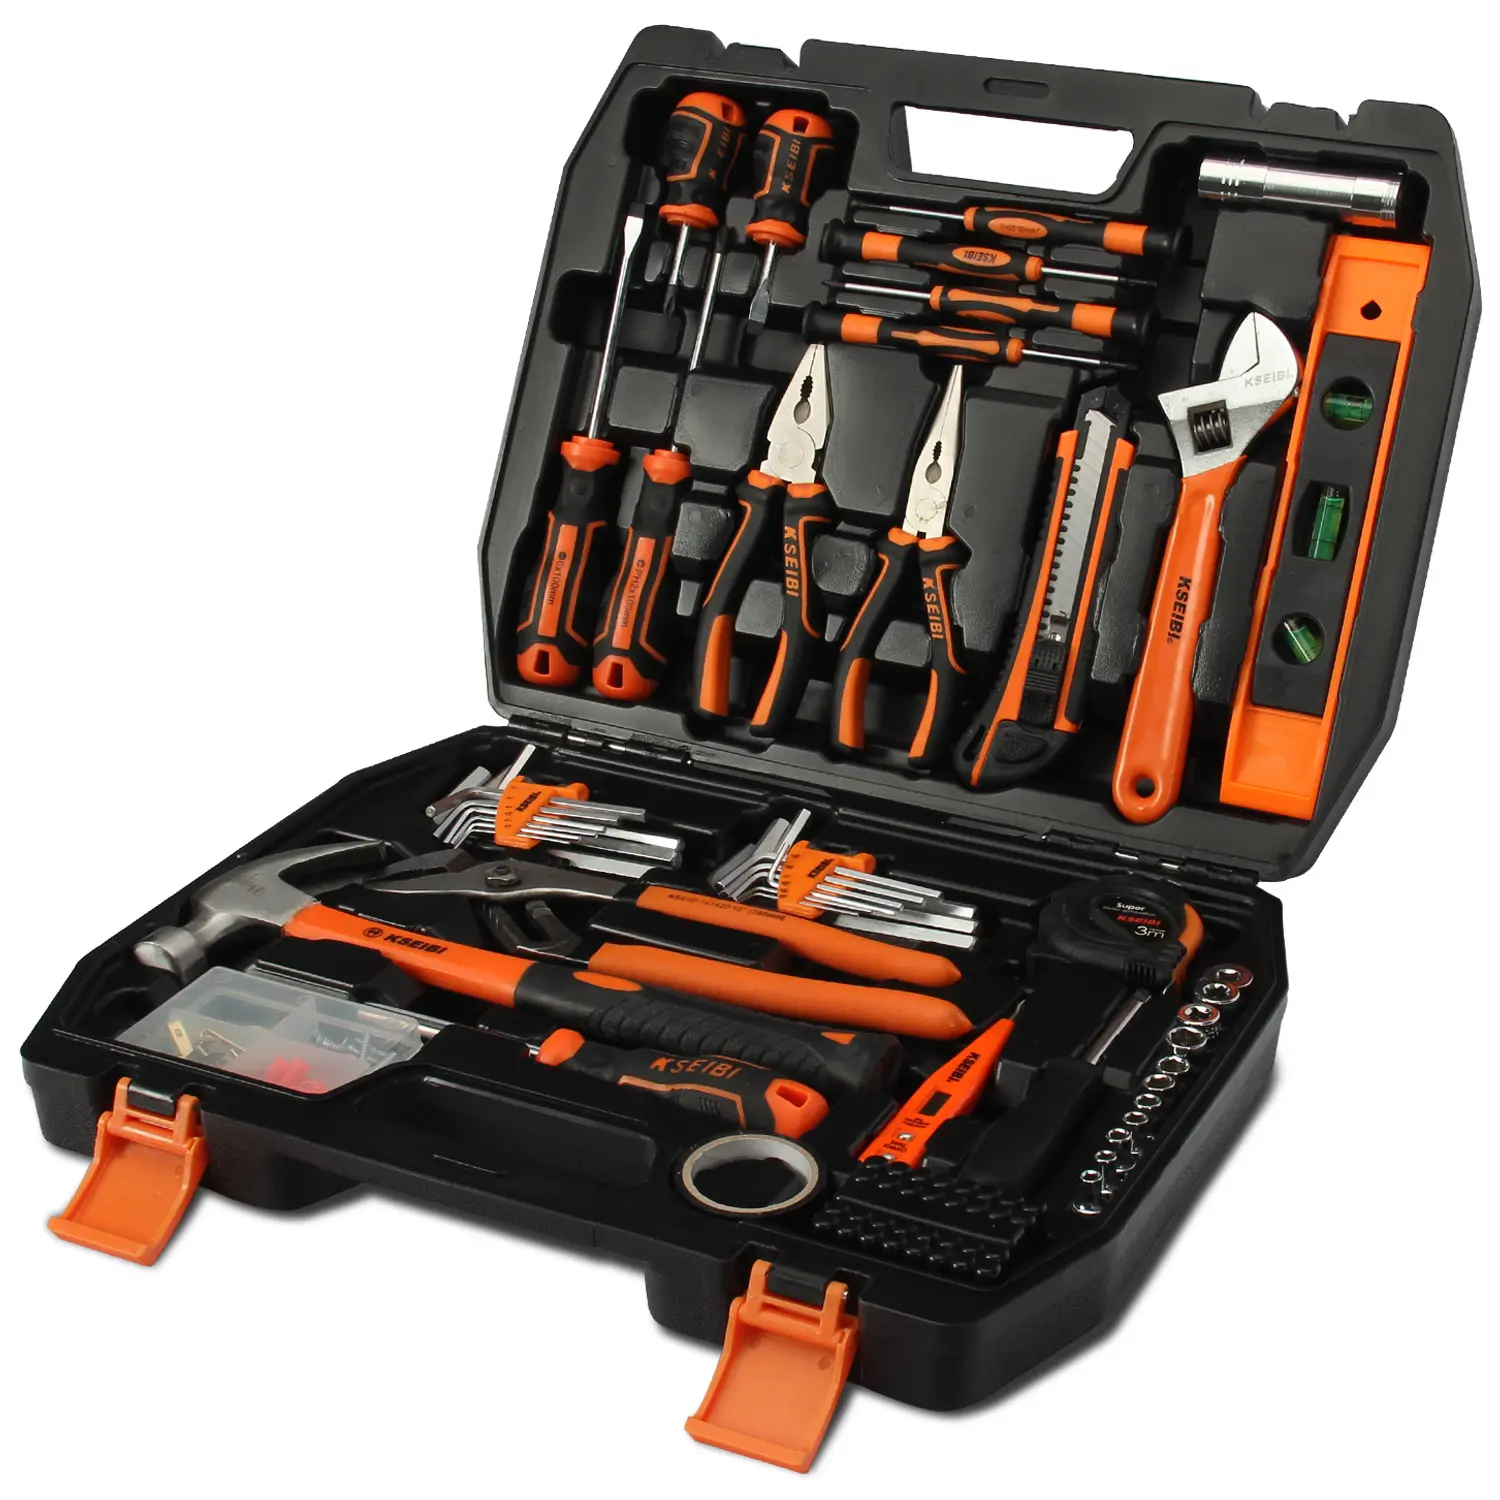 KSEIBI Full Toolset Plastic Box 84-pc Car Repair Tool kits Hand Tool Kits